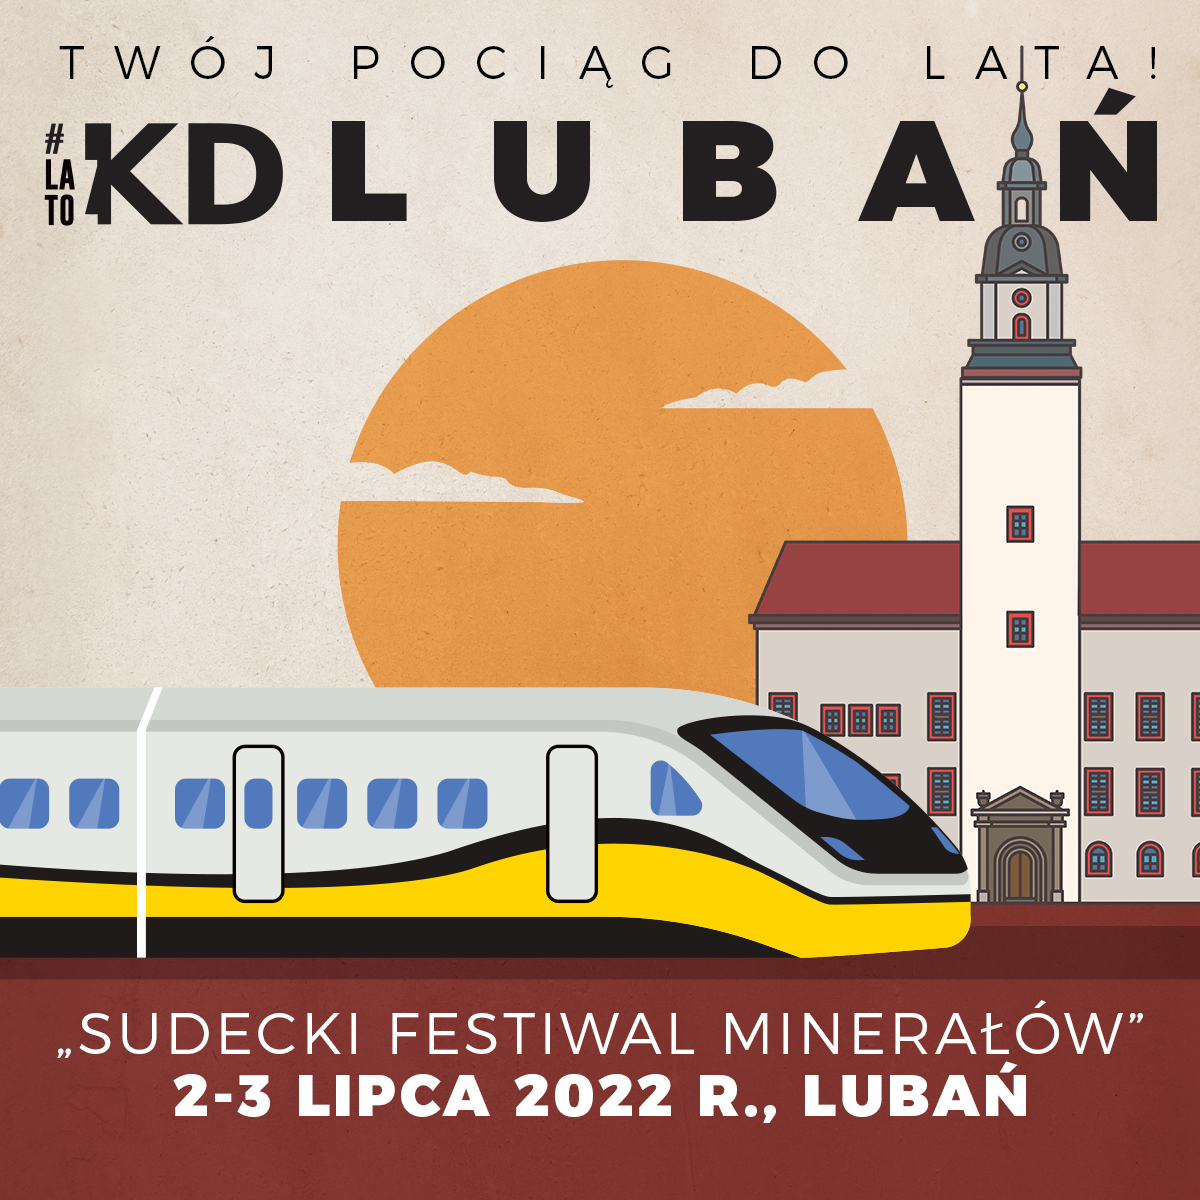 Sudecki Festiwal Minerałów w Lubaniu